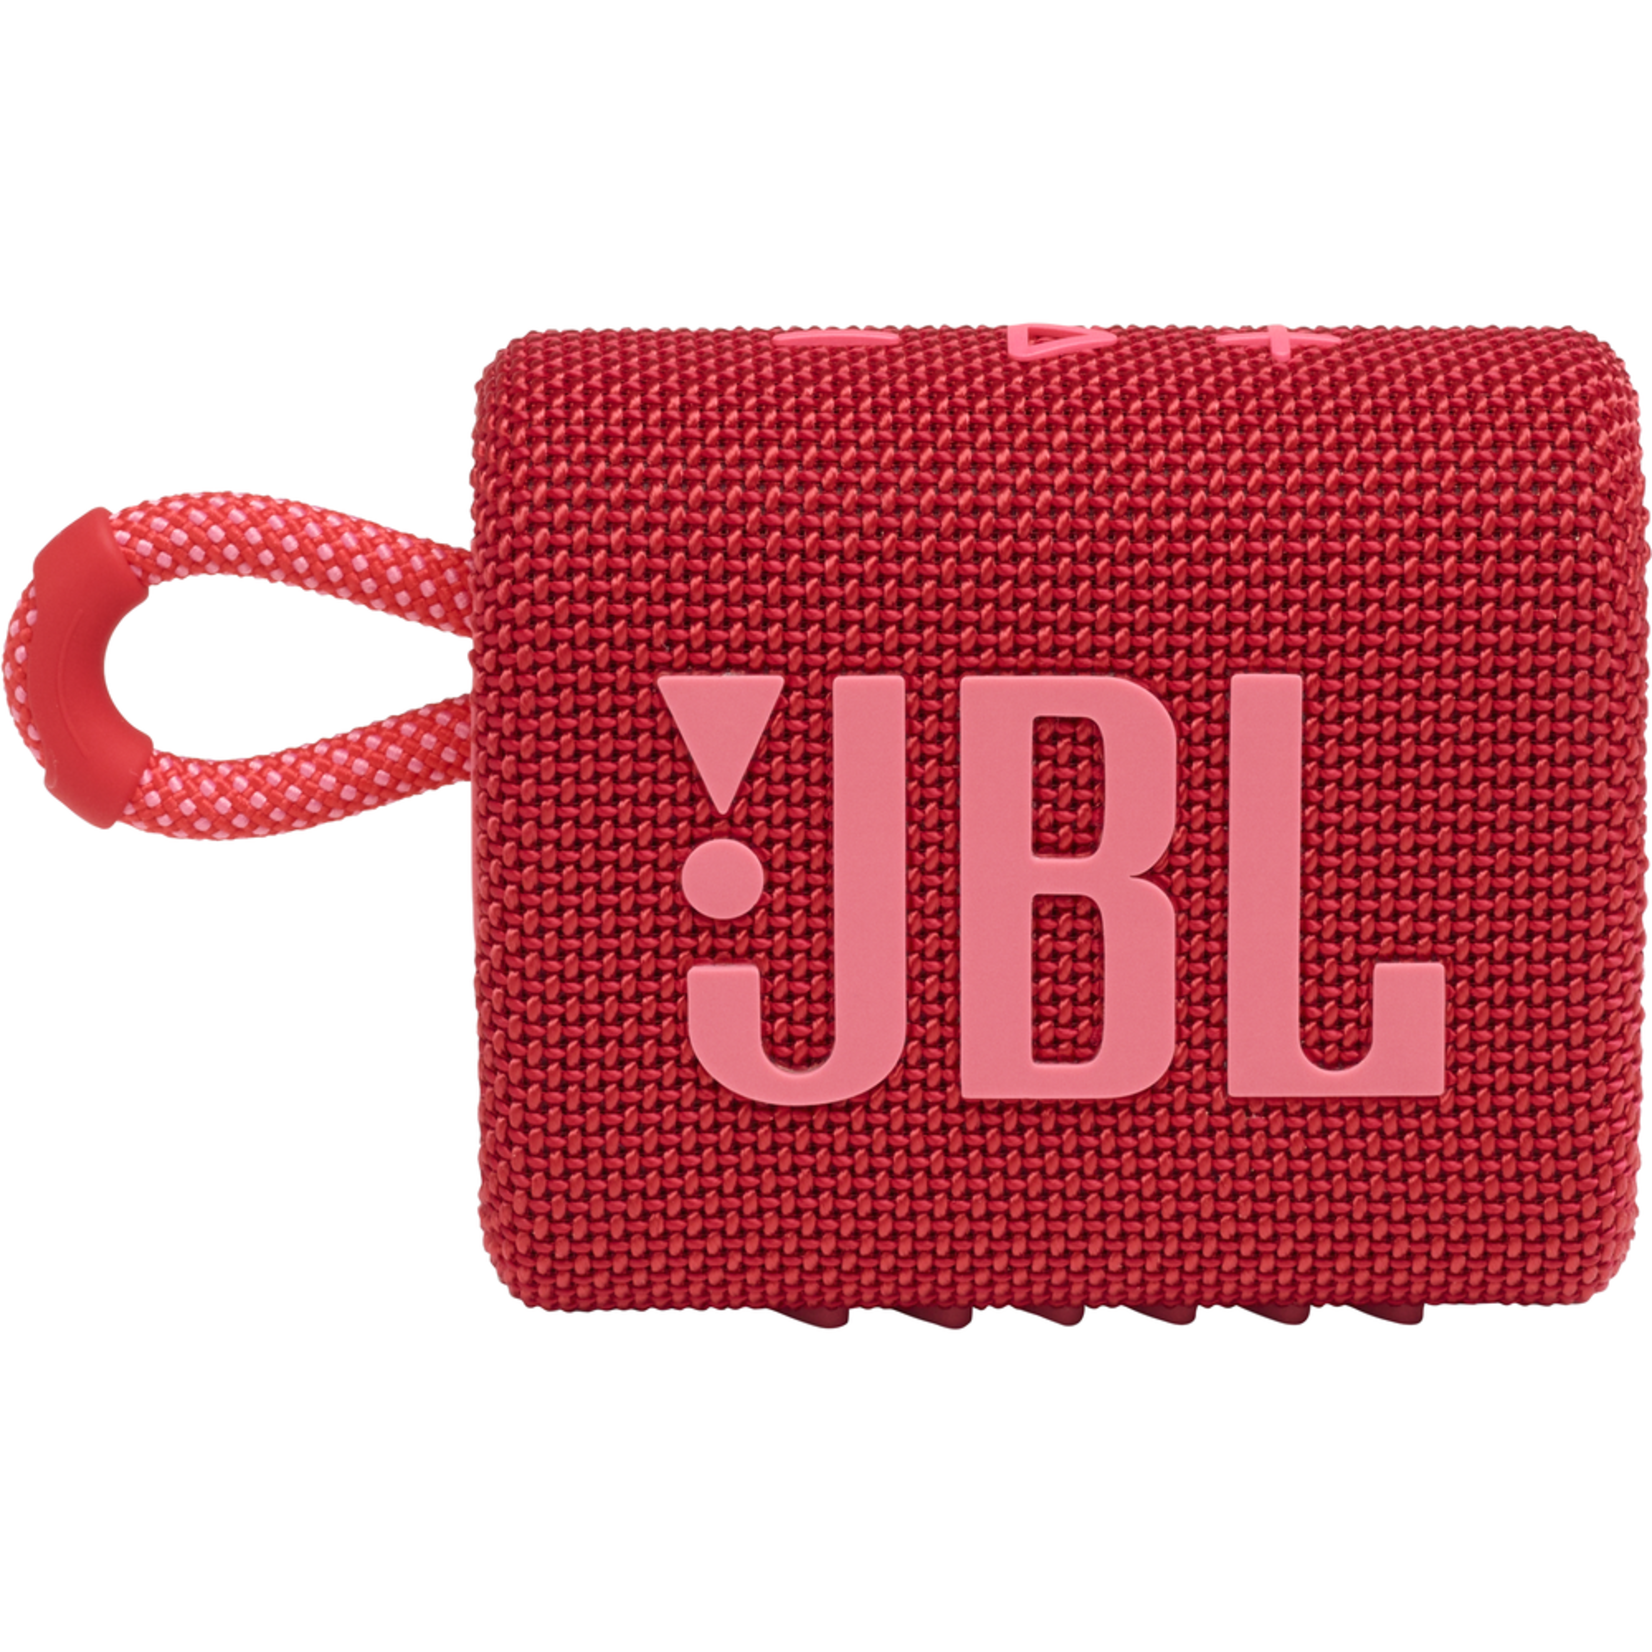 JBL JBL Go 3 Wireless Speaker Red